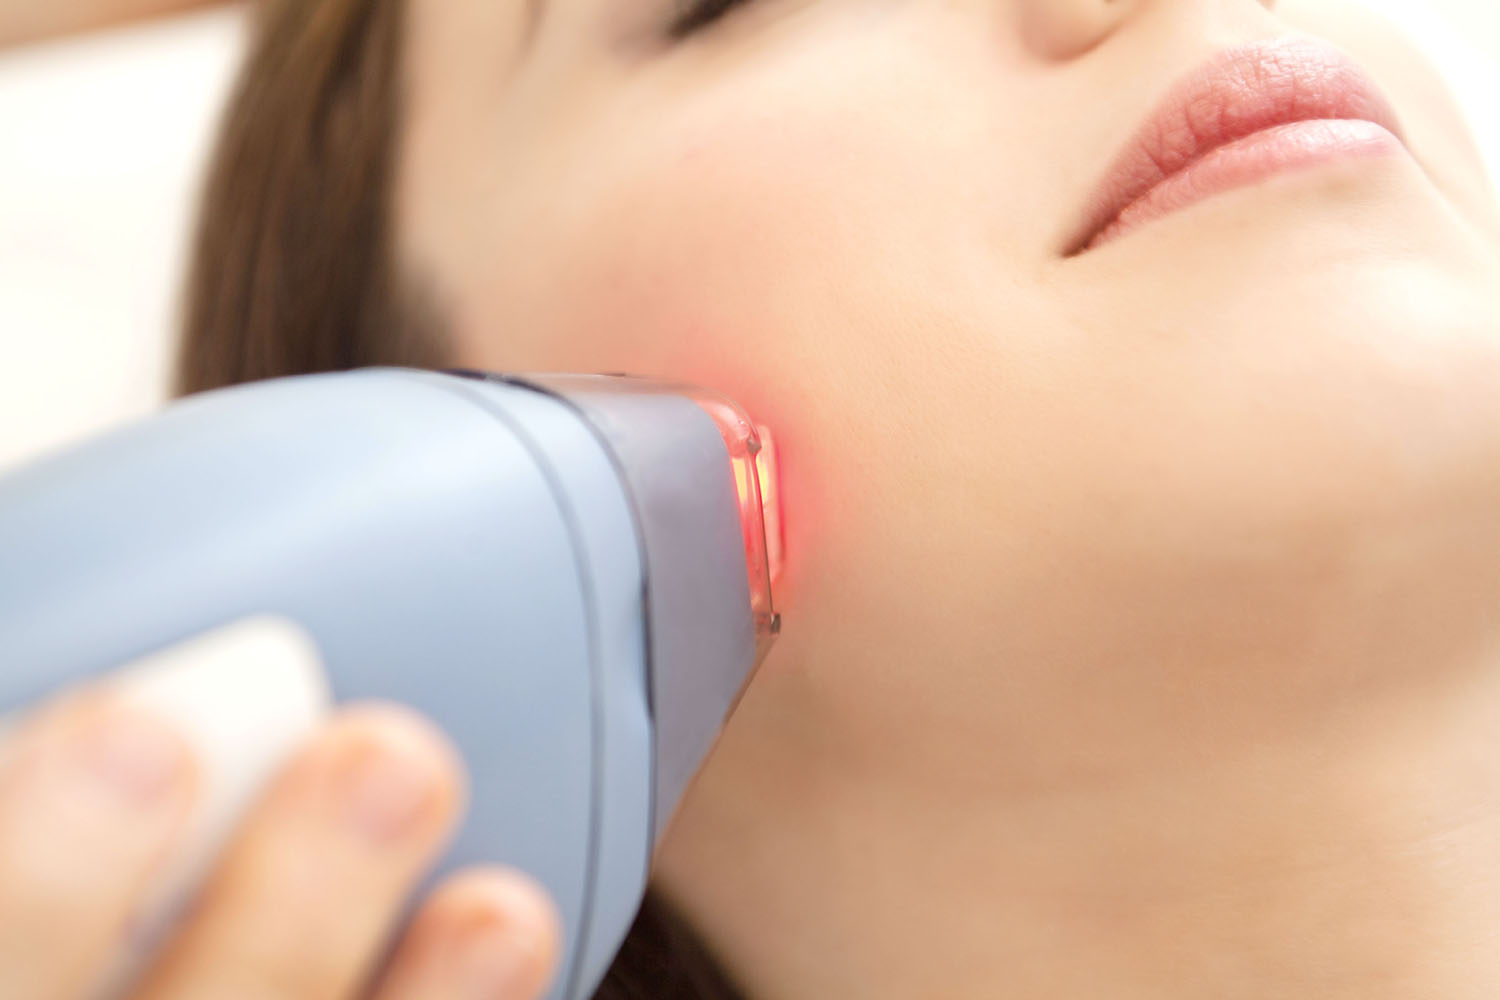 Laser Hair removal - نظرات کارشناس زیبان در خصوص مزایای لیزر موهای زائد